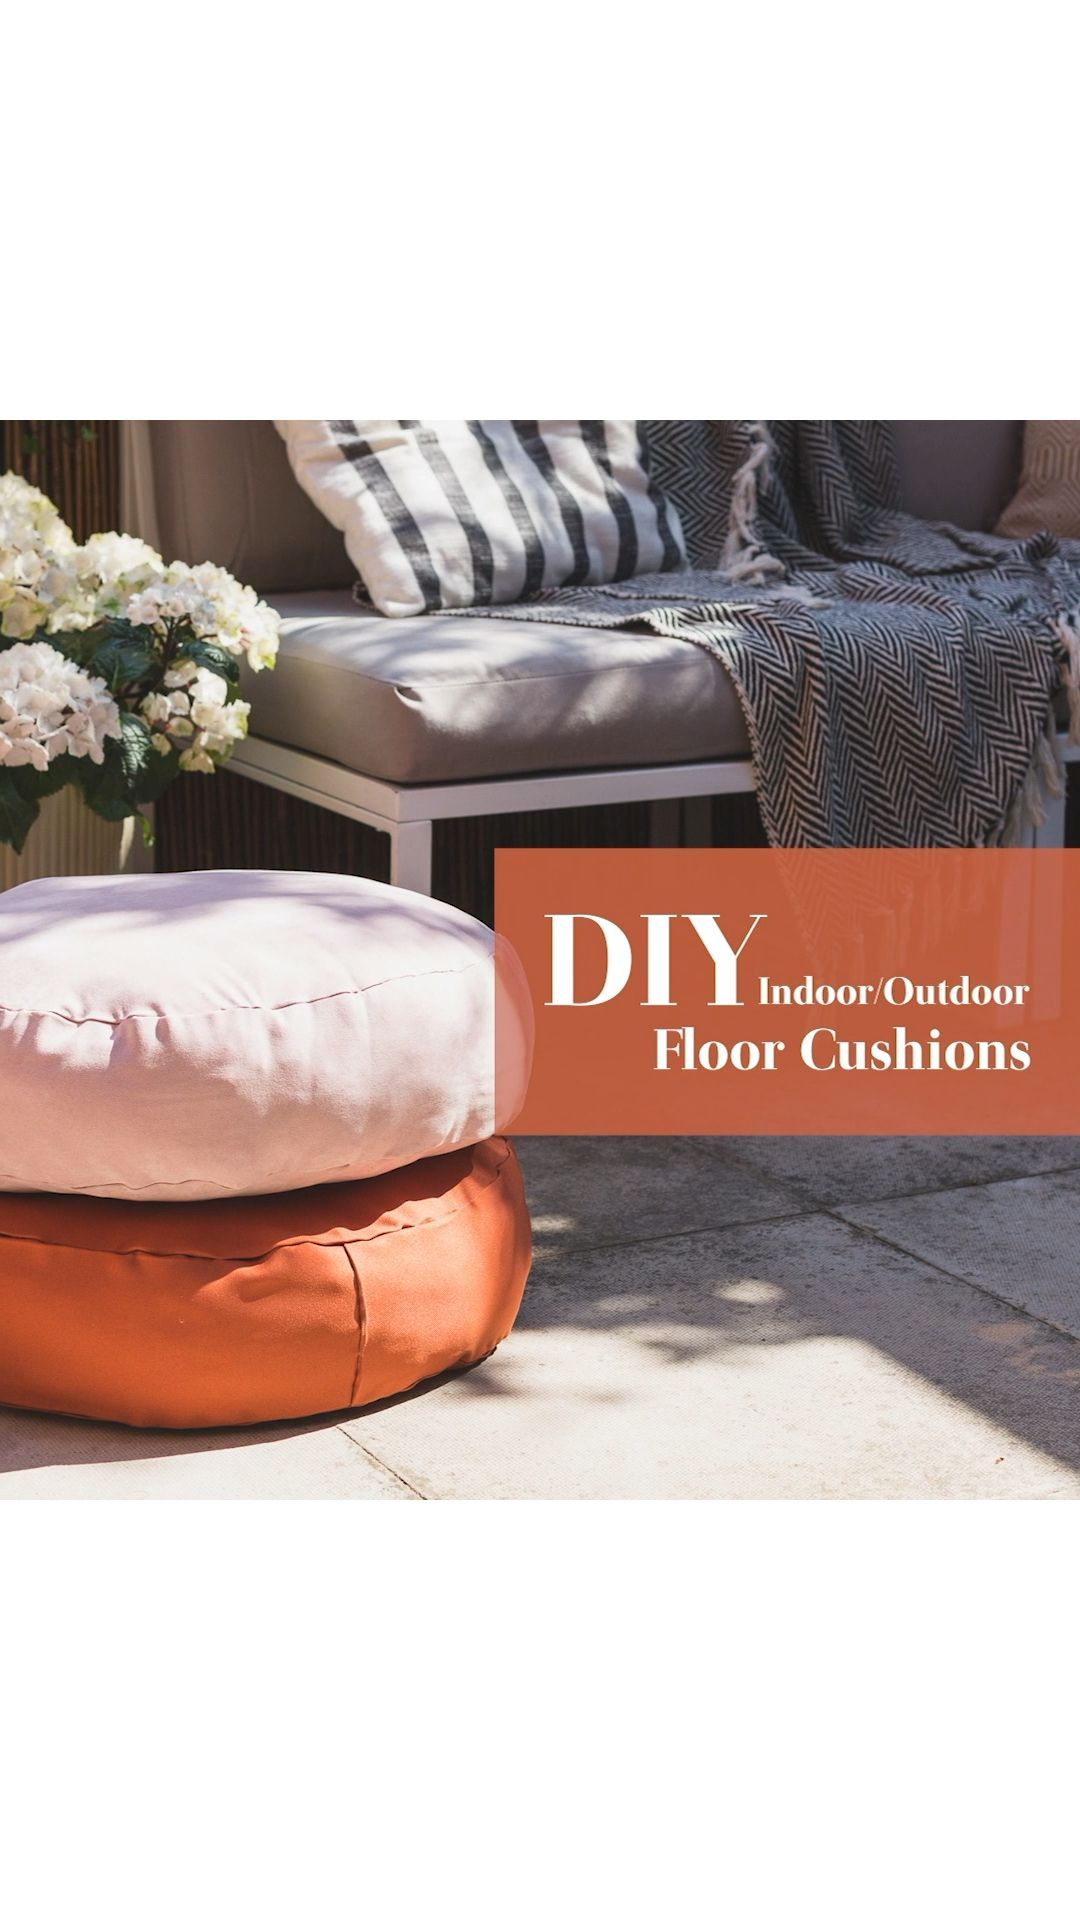 DIY No Sew Indoor/Outdoor Floor Cushions - DIY No Sew Indoor/Outdoor Floor Cushions -   18 diy Outdoor cushions ideas